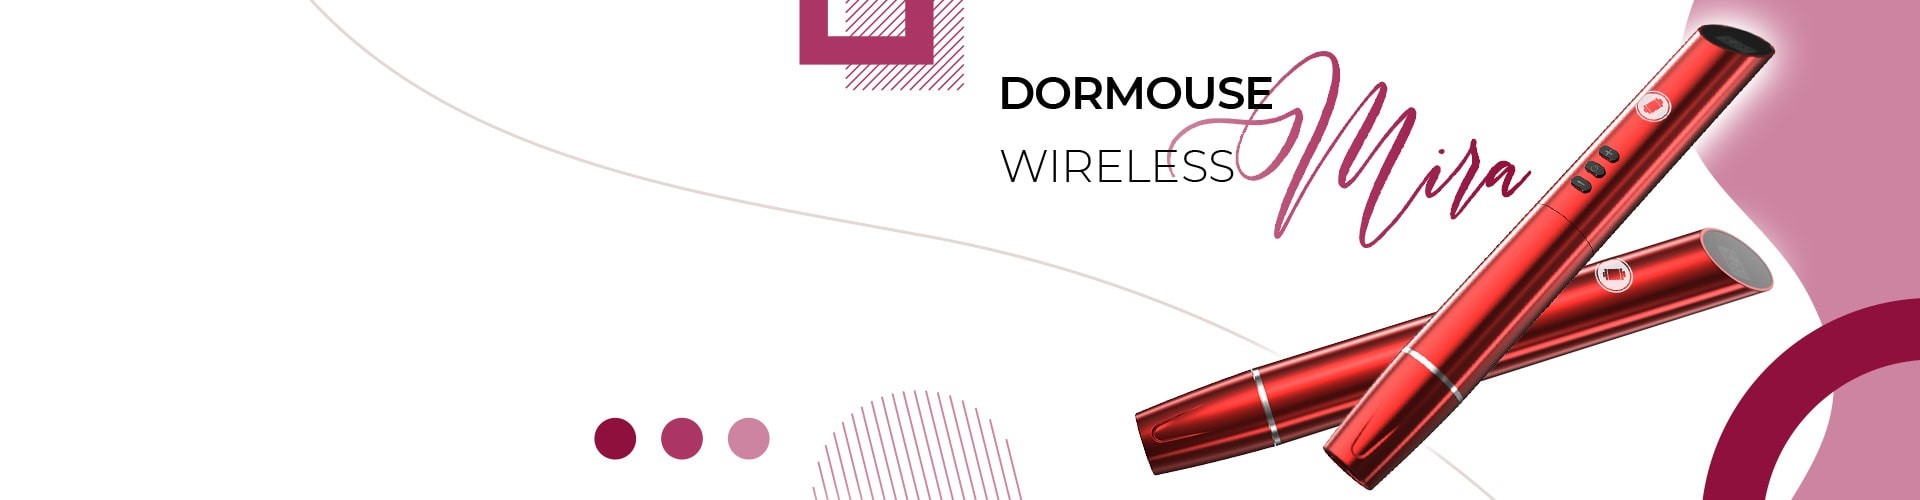 Dormouse Mira Wireless